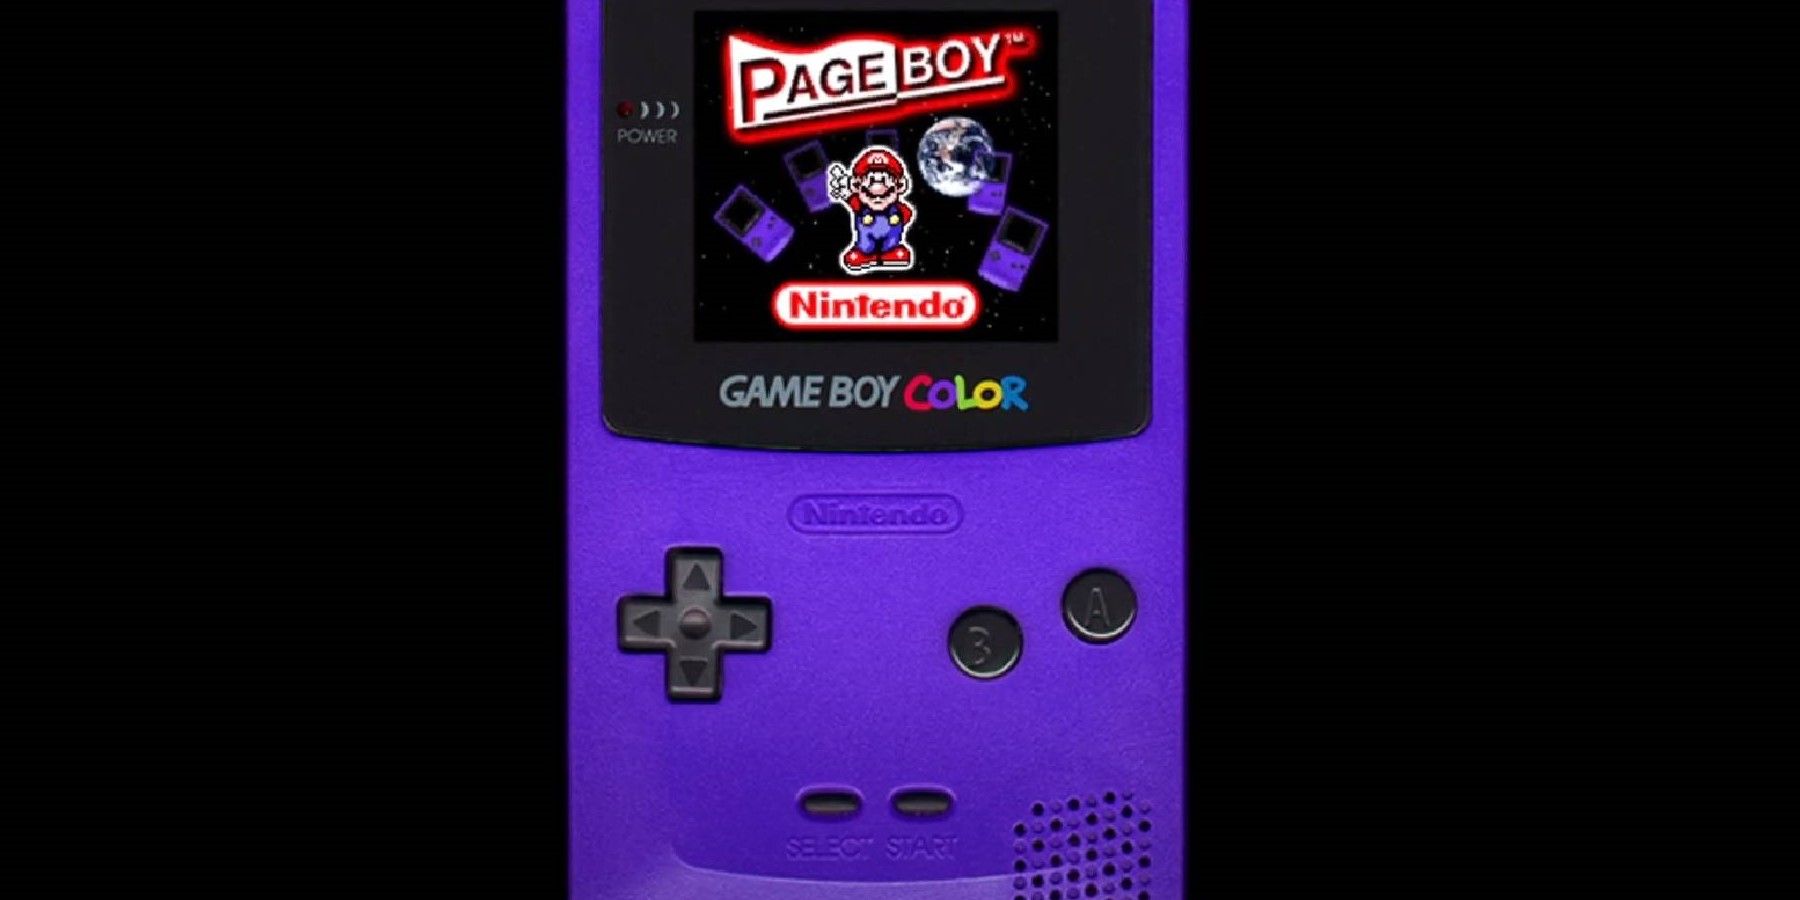 Nintendo-page-boy-revealed